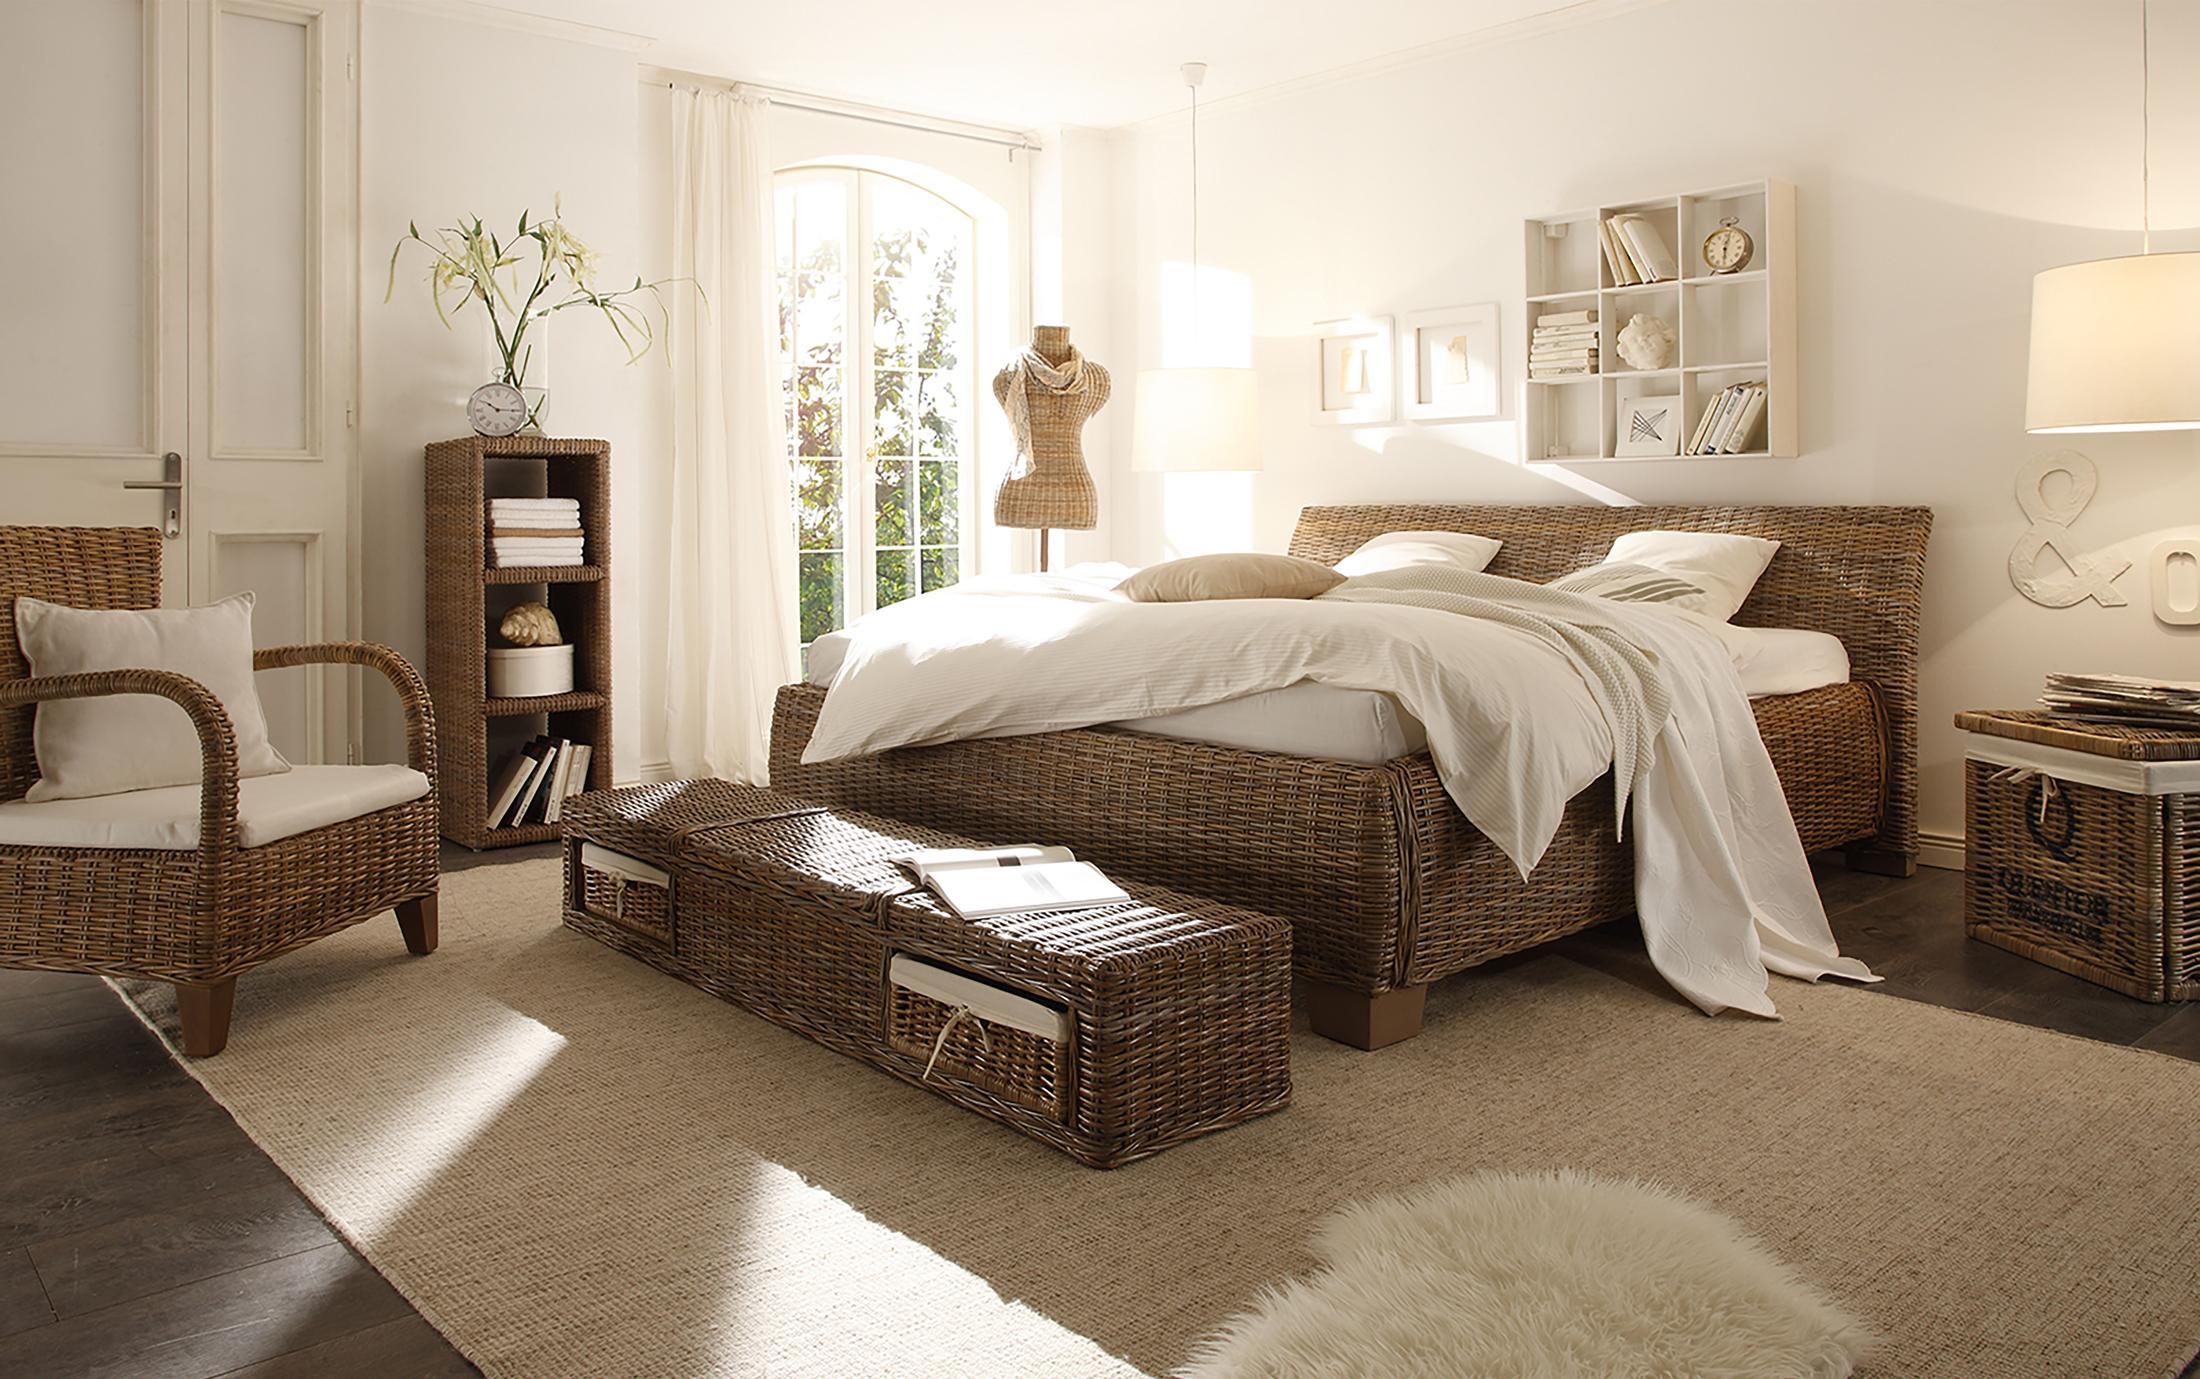 Schlafzimmer mit Rattan-Möbeln #bett #sessel #sitzbank #hängeleuchte #korbsessel #rattansessel ©Massivum